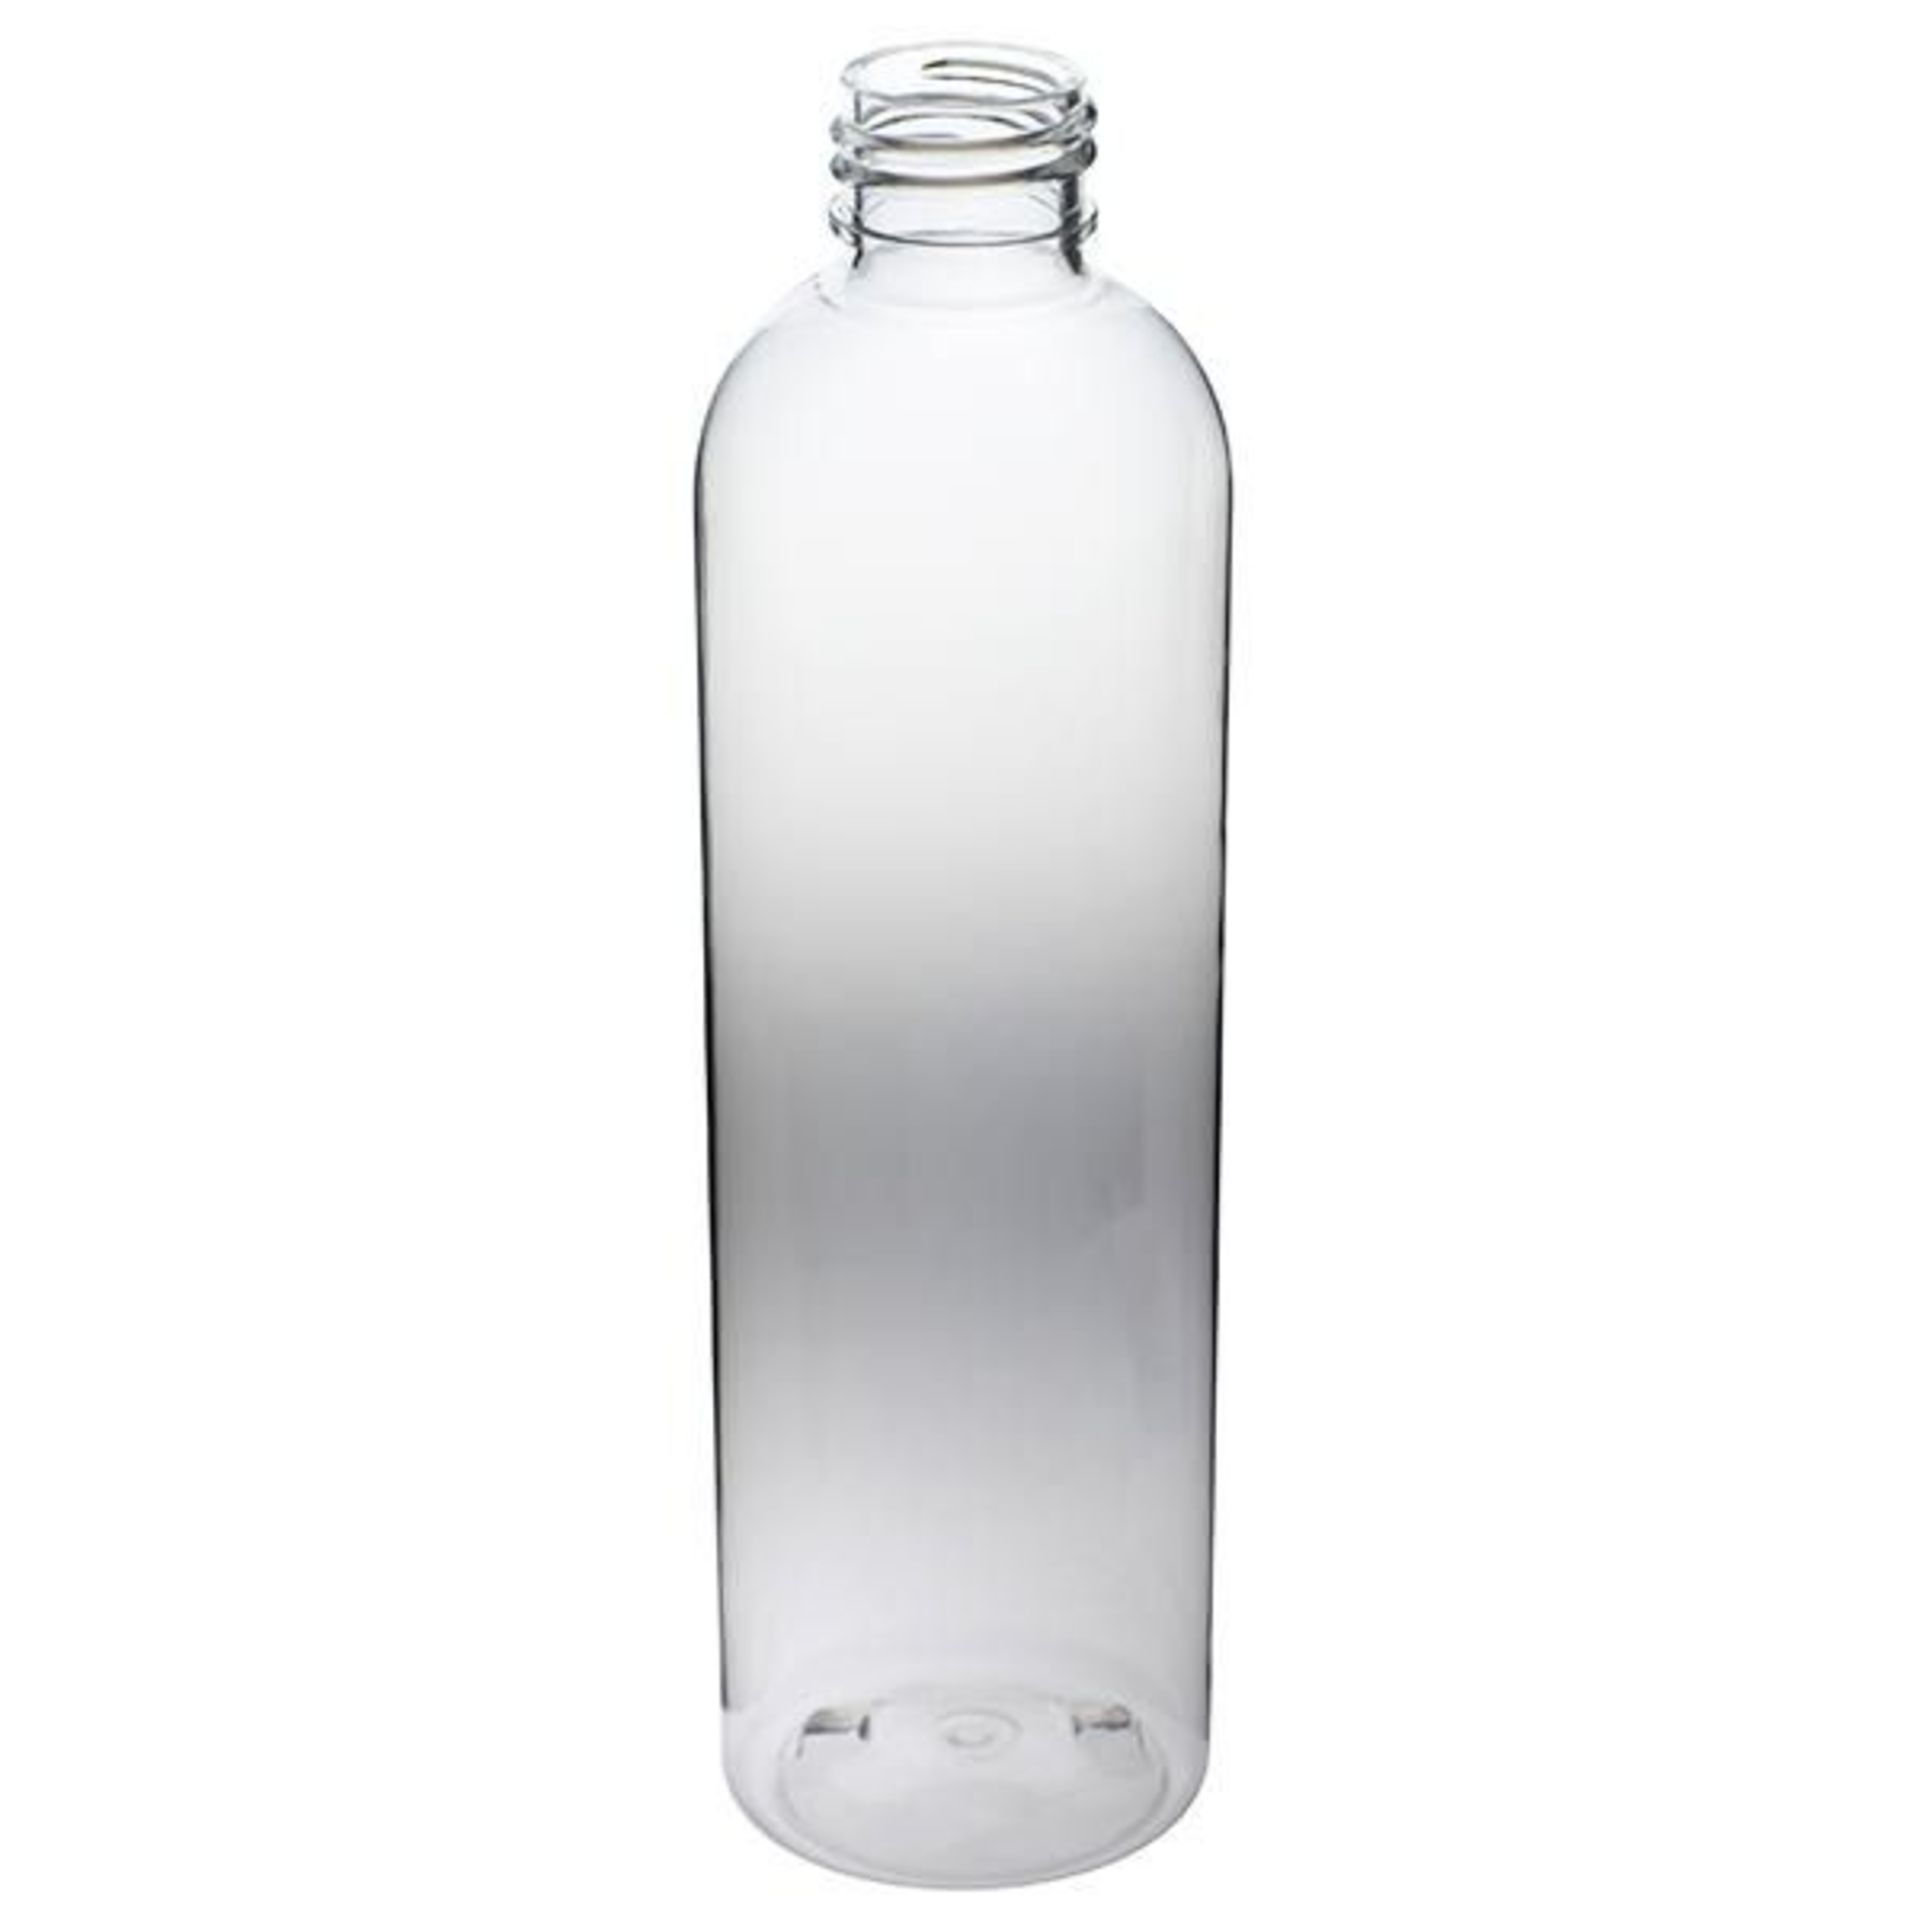 75,000 - Clear Plastic Bullet 8 oz Empty Bottles, 24-410 Threading Neck, 6.25" Tall, 2" Diameter